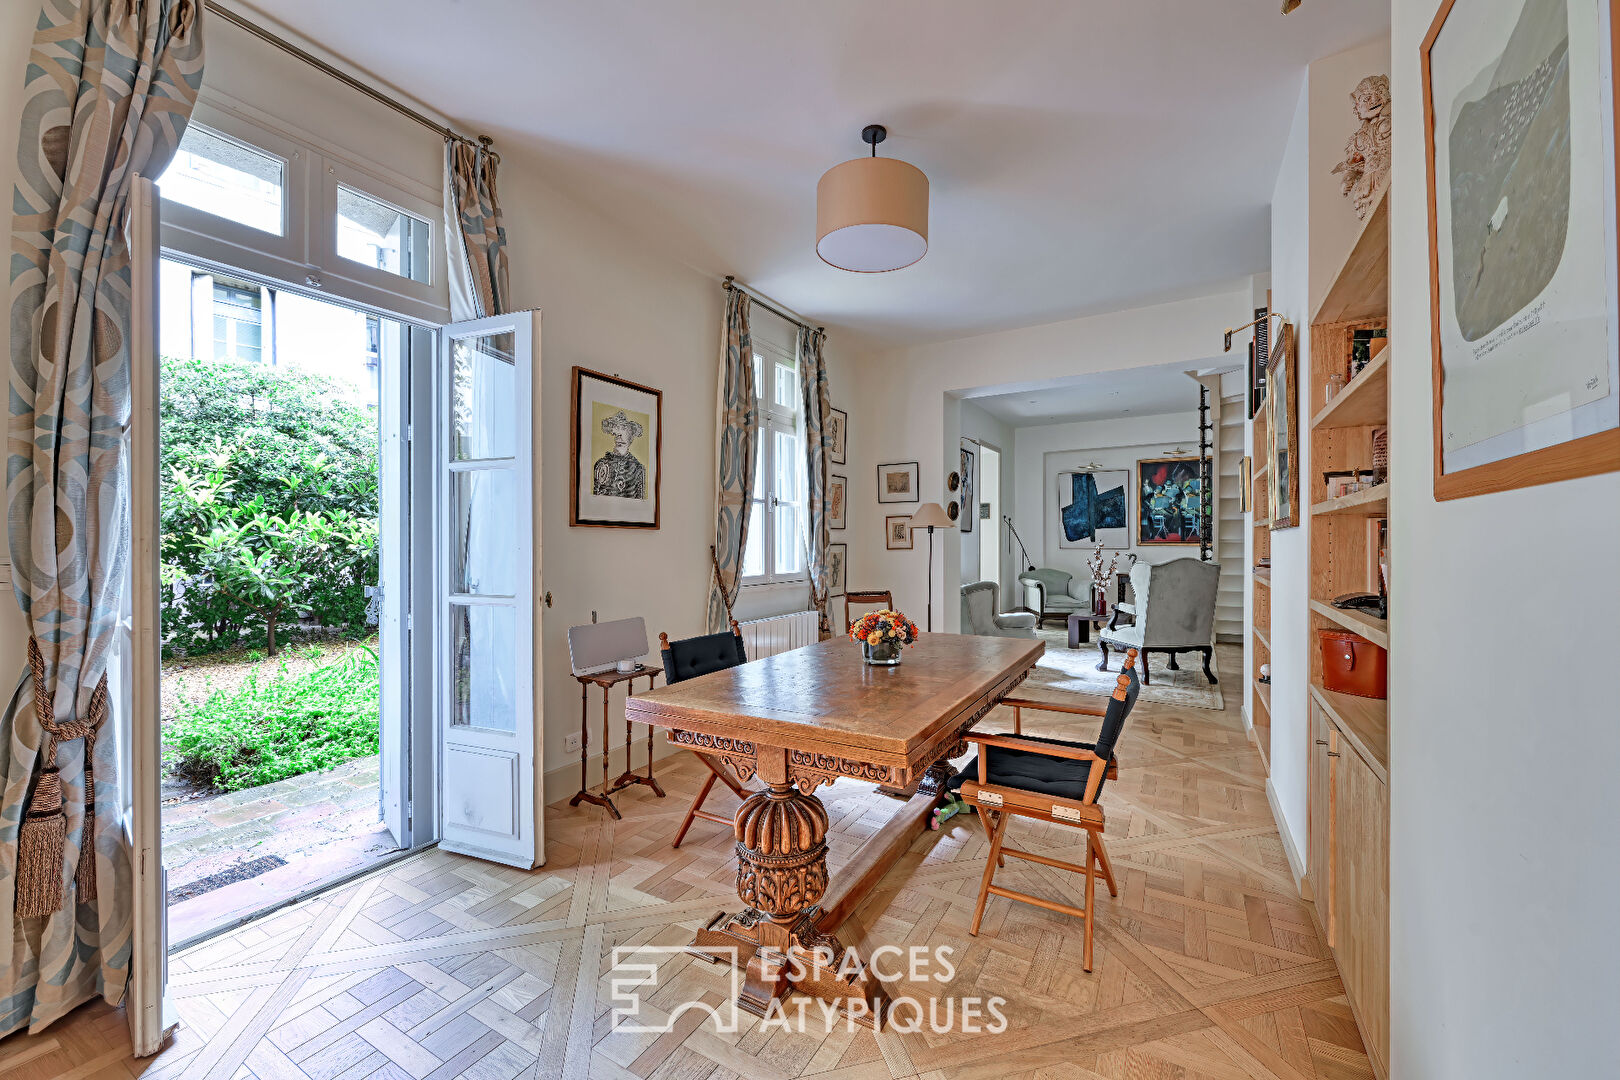 Duplex apartment with garden in the heart of Montpellier